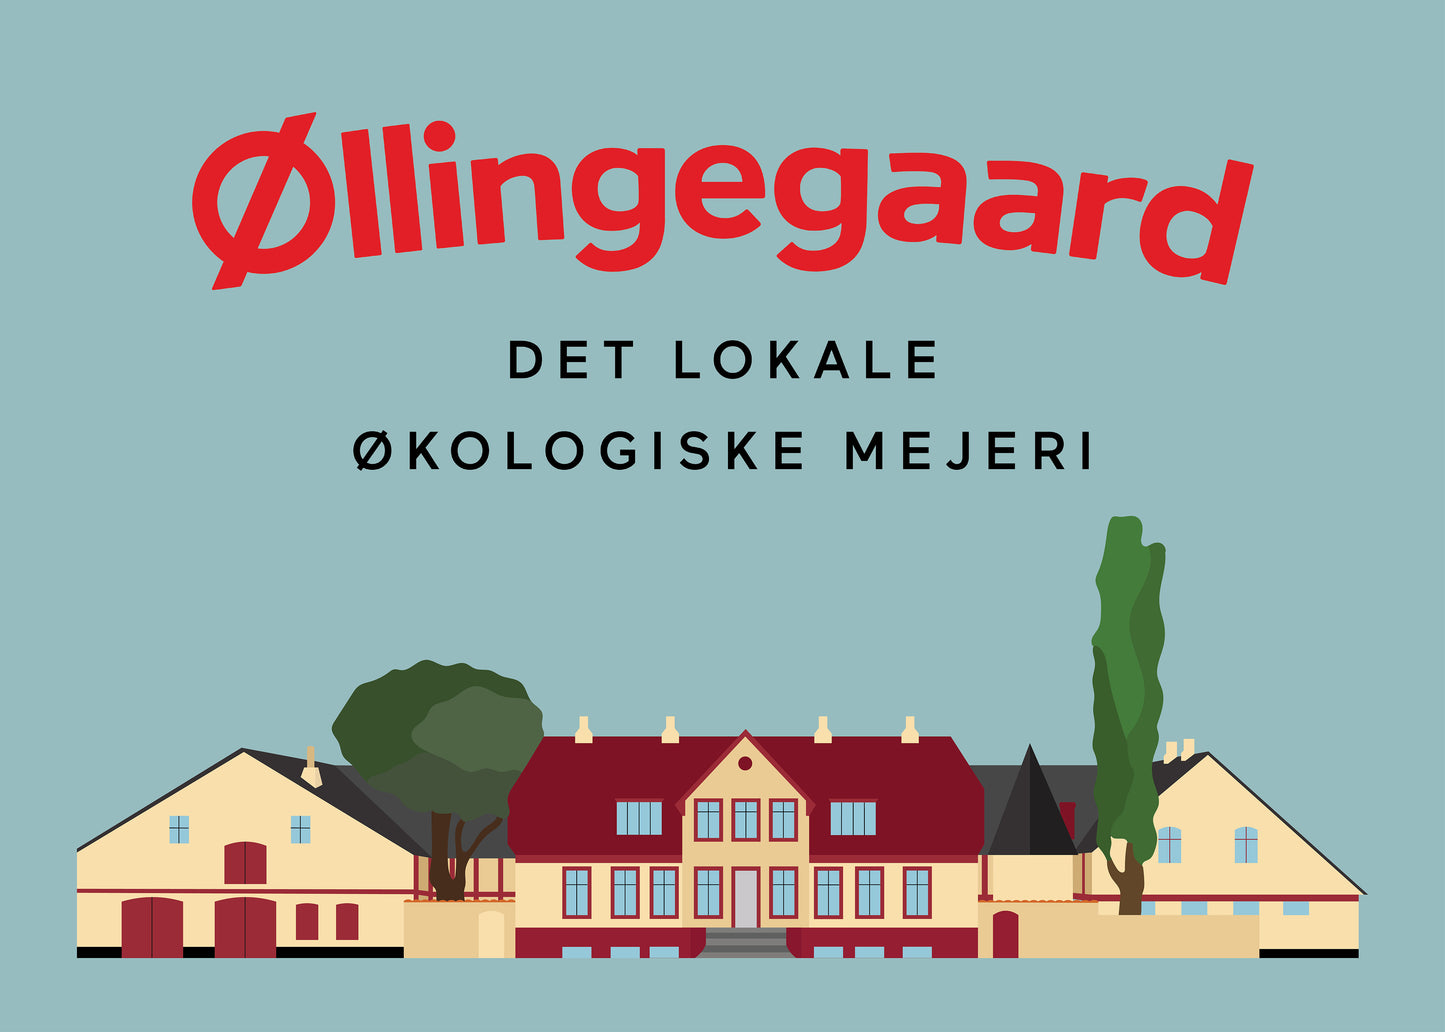 Plakat "Øllingegaard Mejeri" 70x50 cm